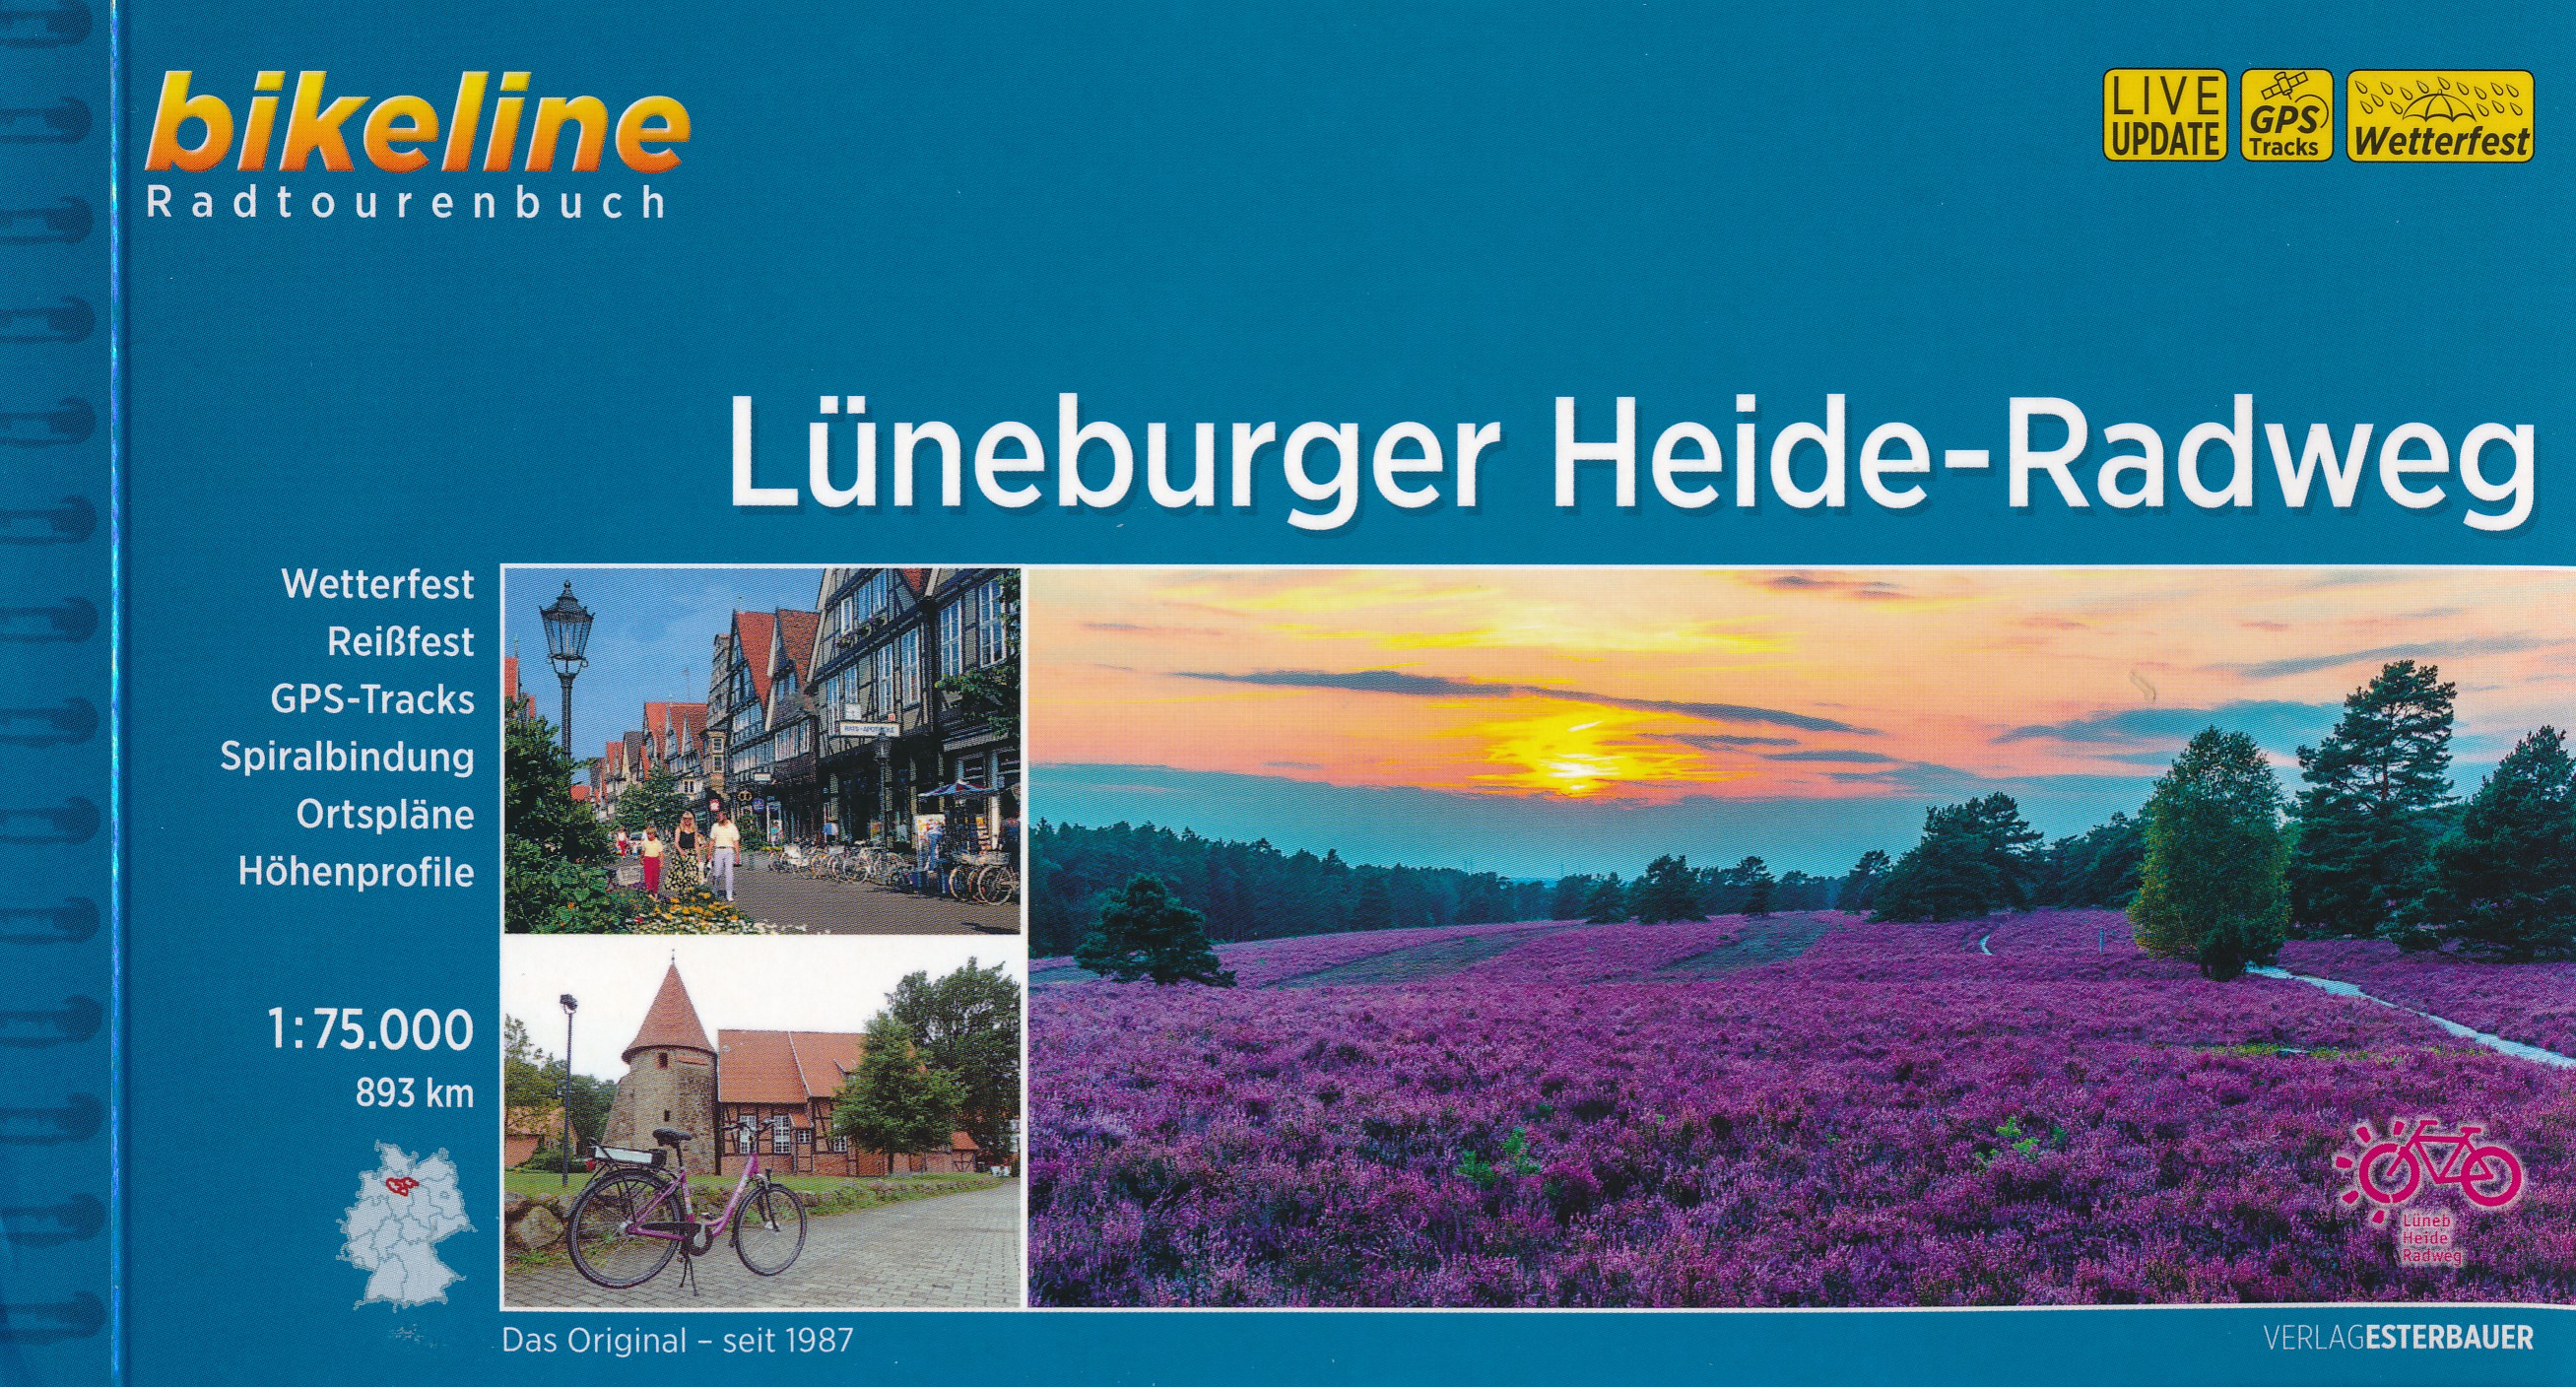 Online bestellen: Fietsgids Bikeline Lüneburger Heide radweg | Esterbauer